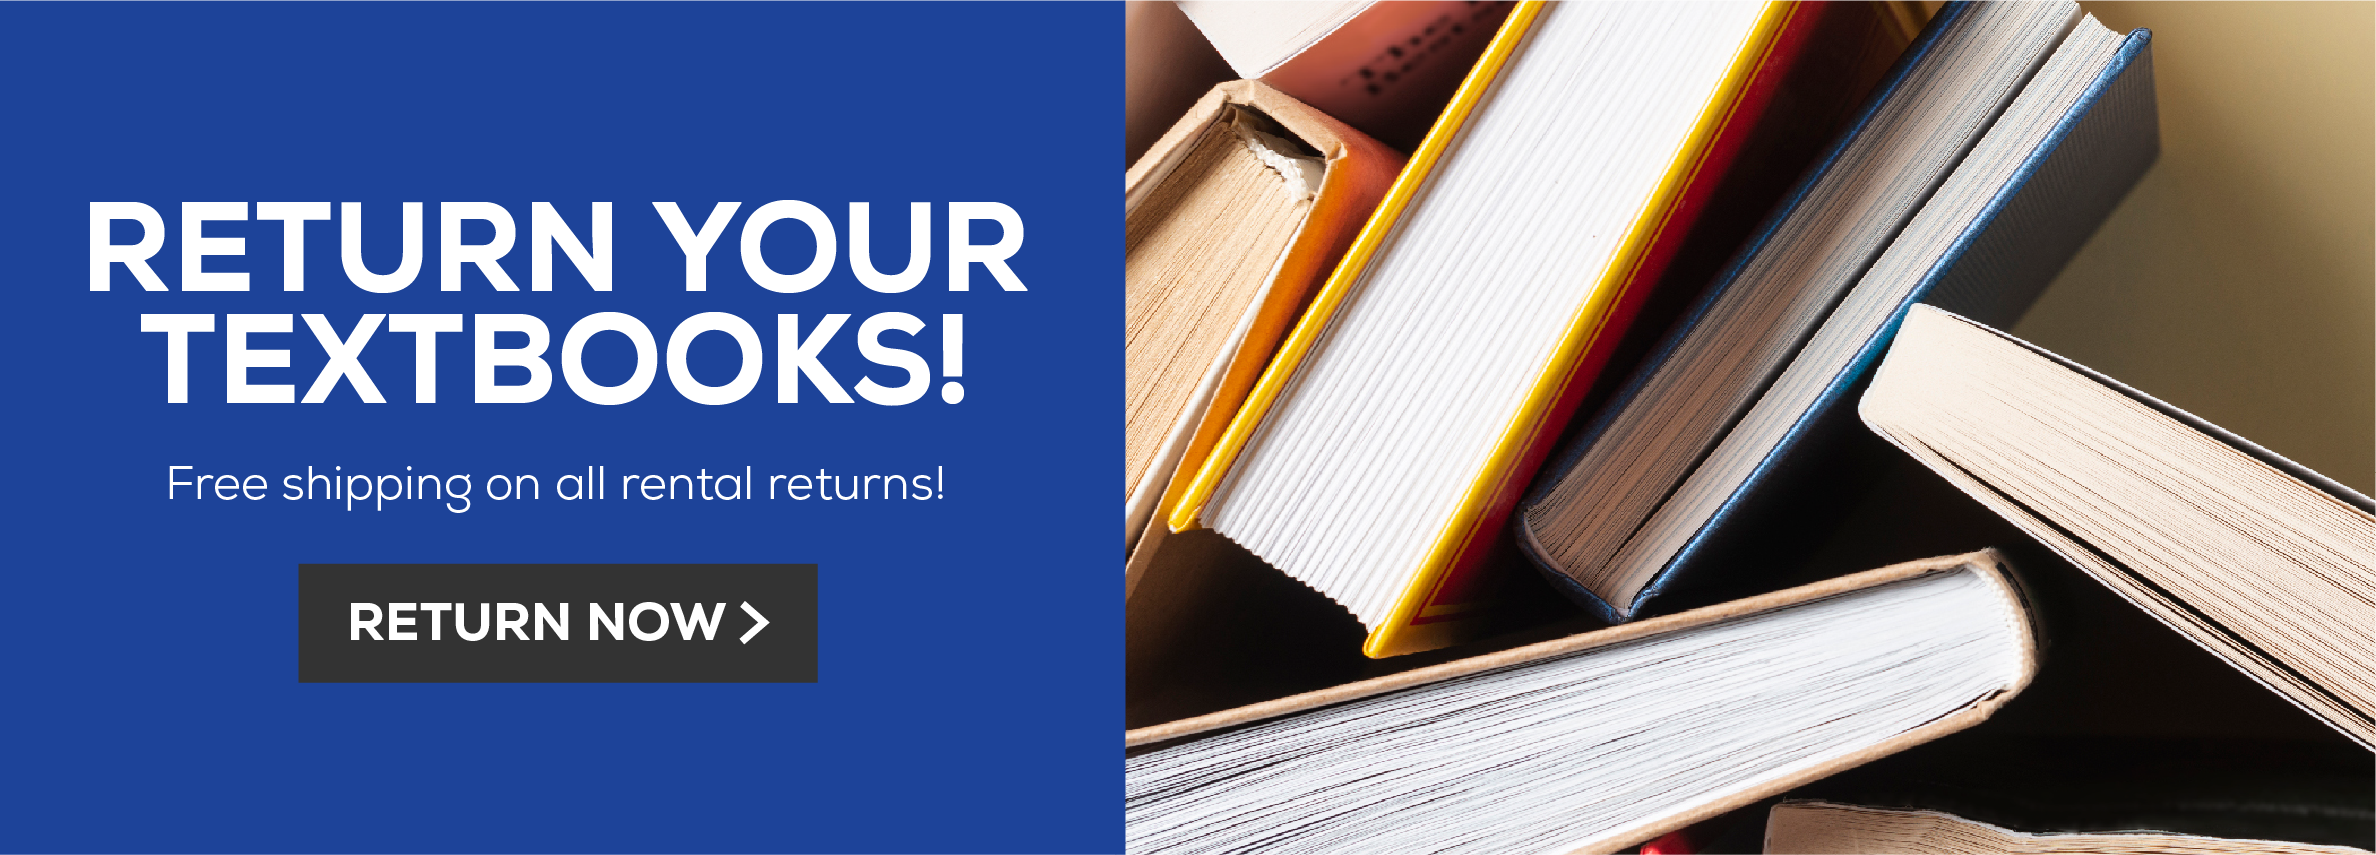 Return your textbooks! Free shipping on all rental returns! Return now.